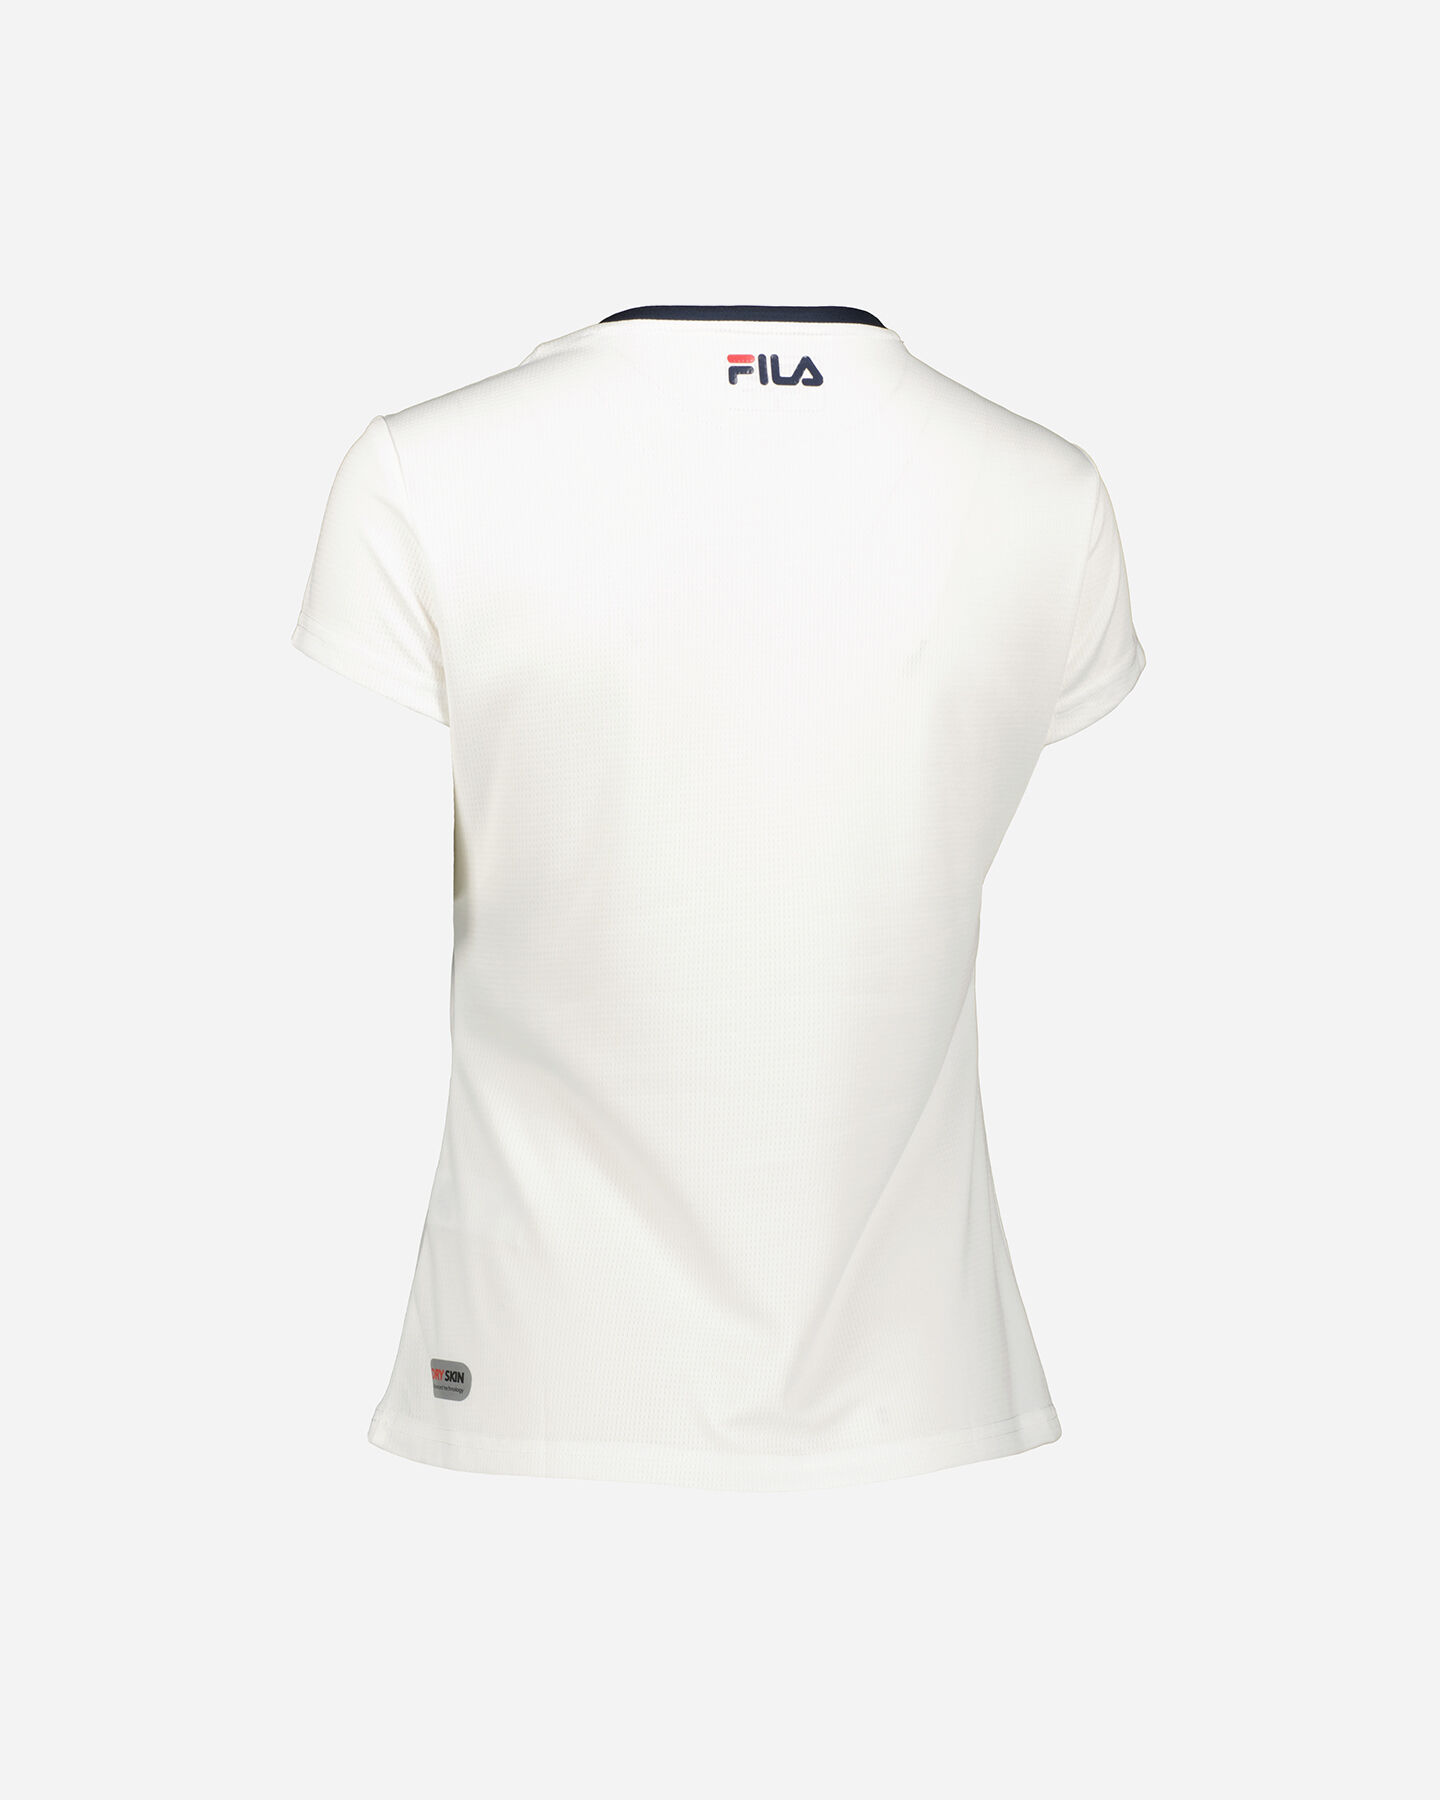  T-Shirt tennis FILA CLASSIC TENNIS W S4100447|001|XS scatto 1